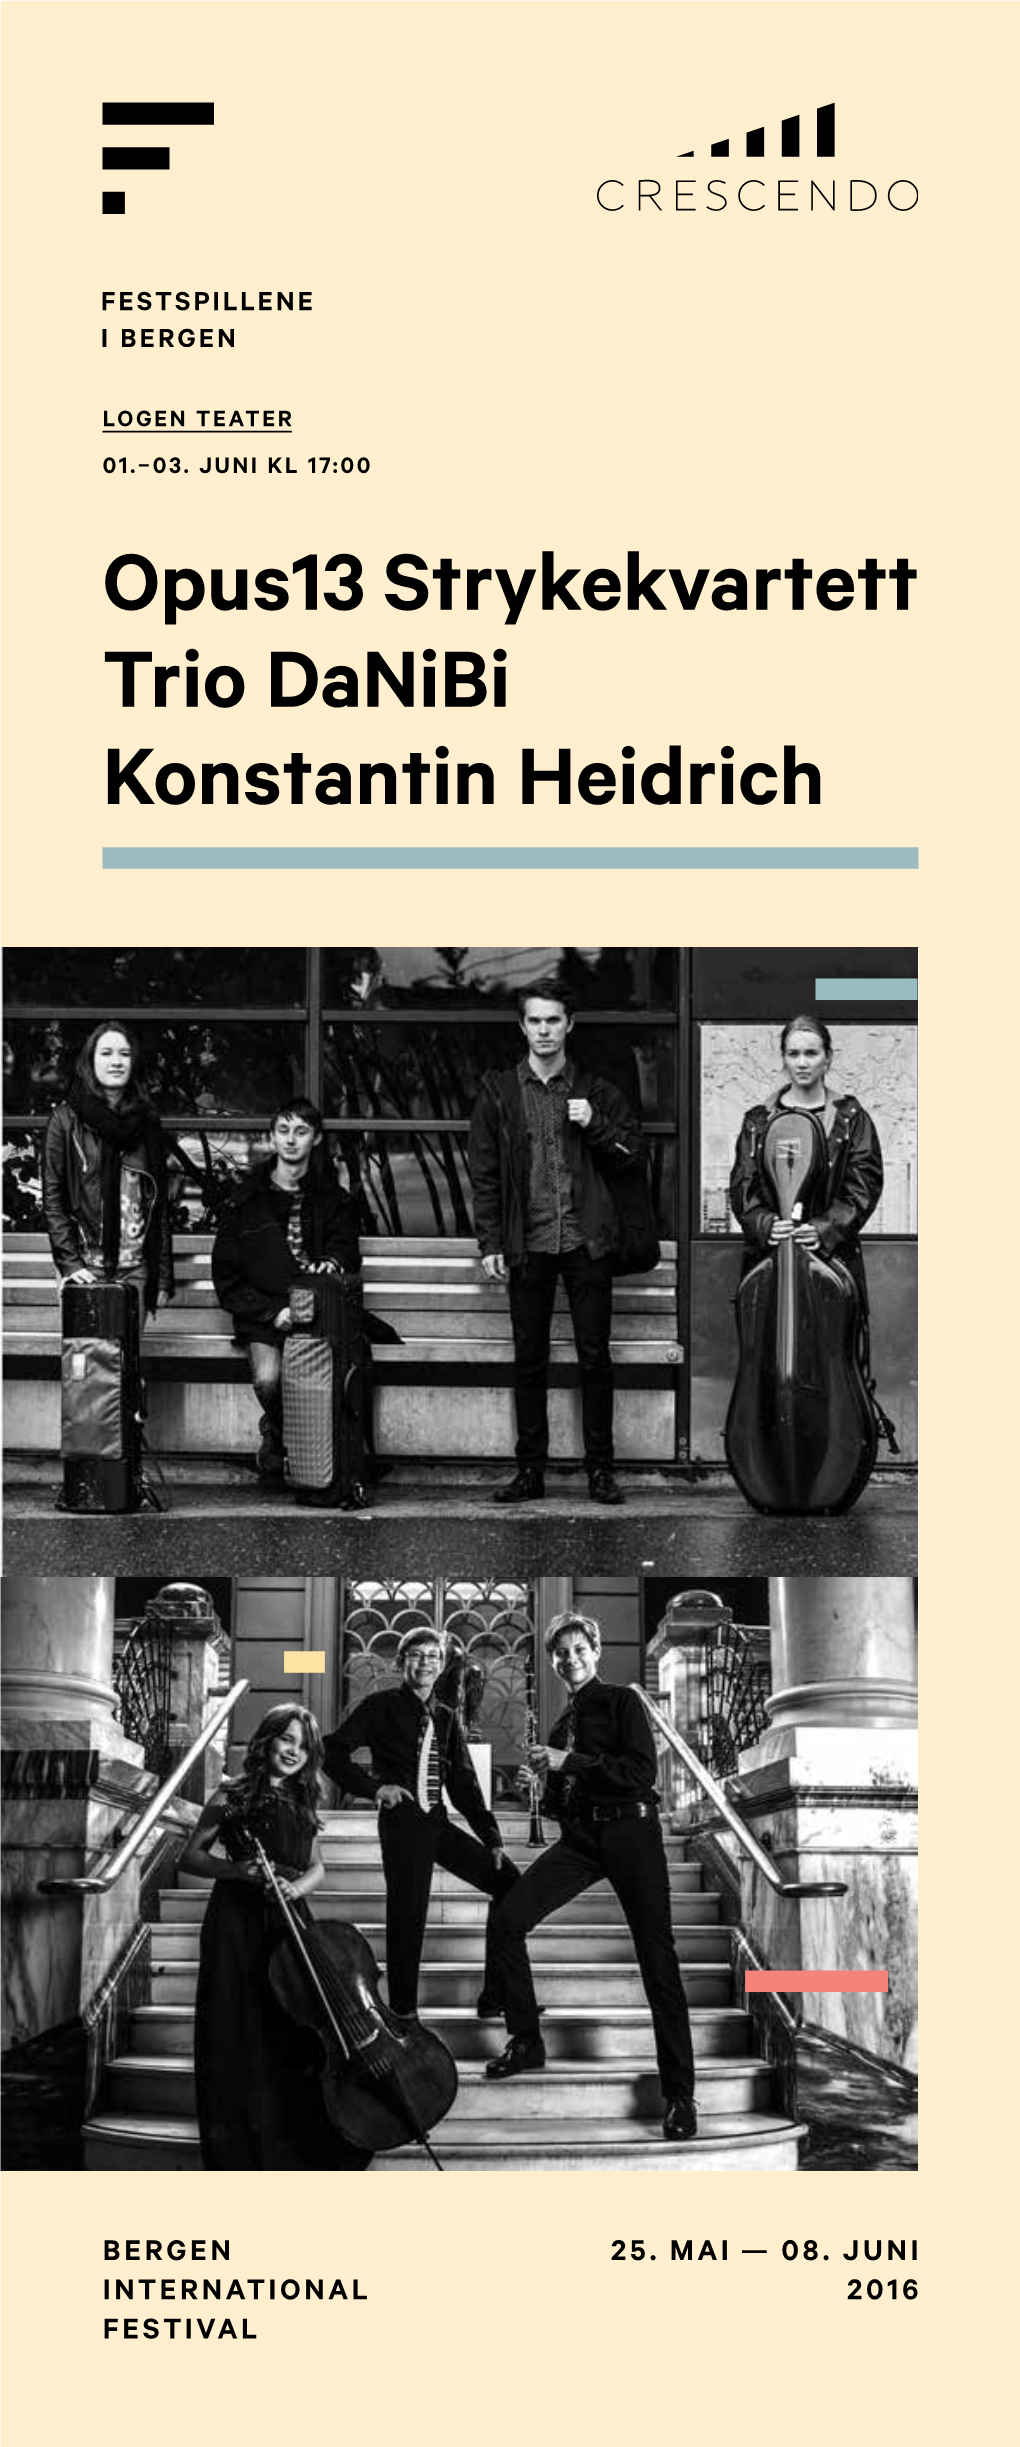 Opus13 Strykekvartett Trio Danibi Konstantin Heidrich